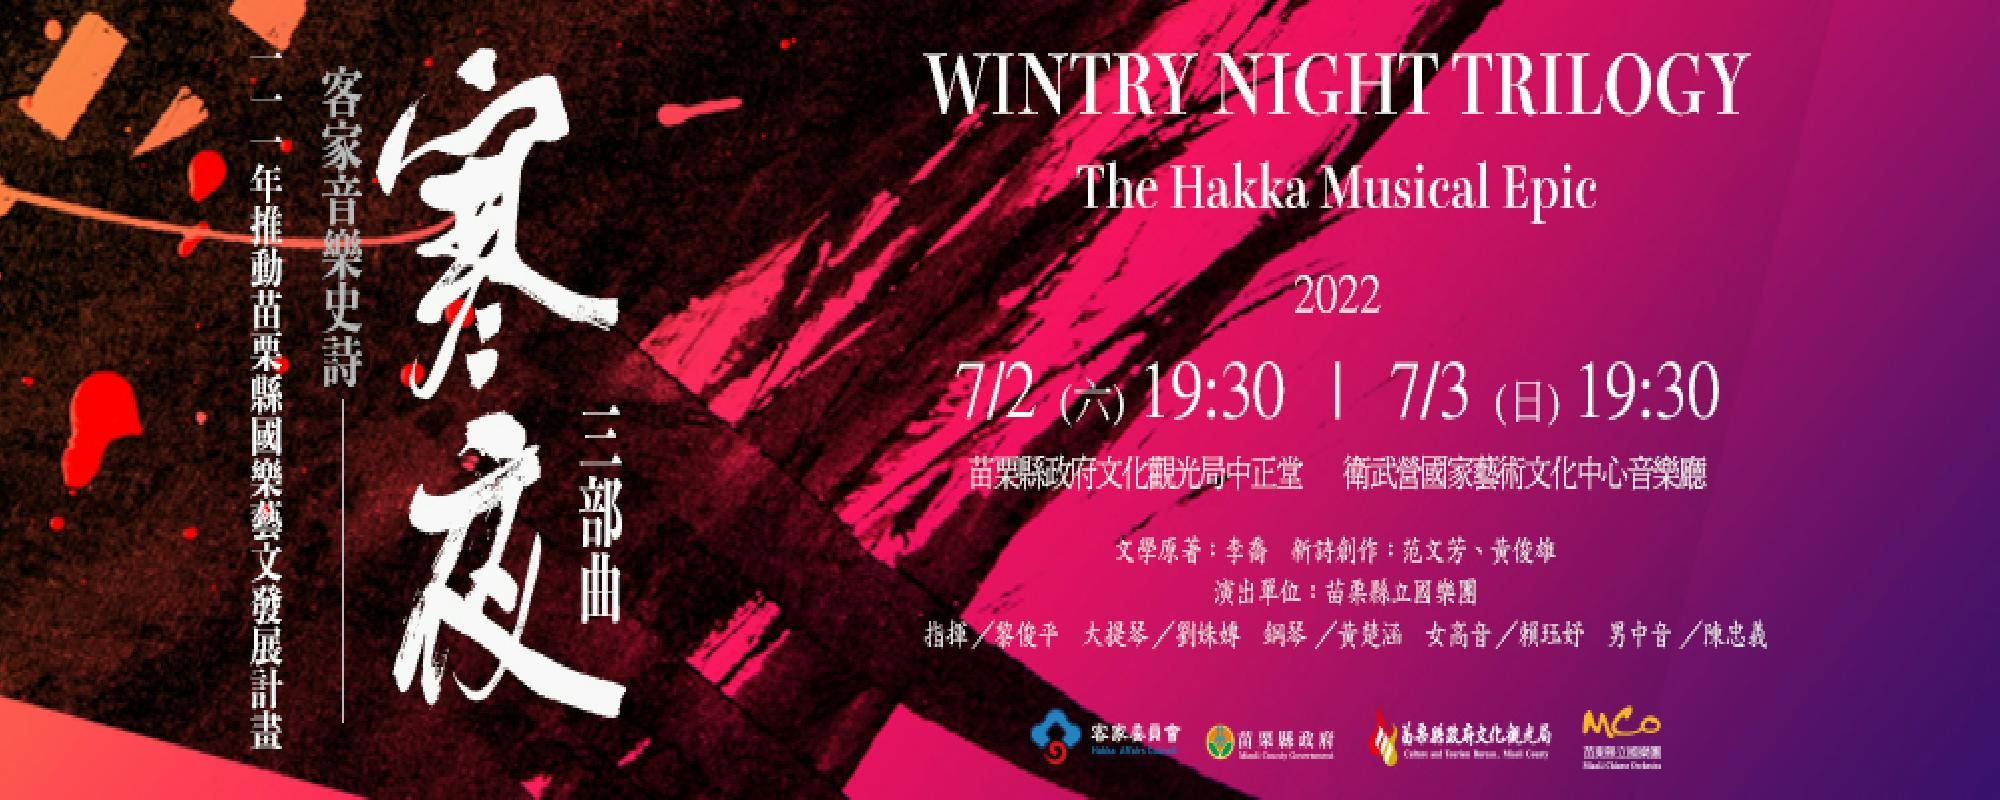 Wintry Night Trilogy / The Hakka Musical Epic